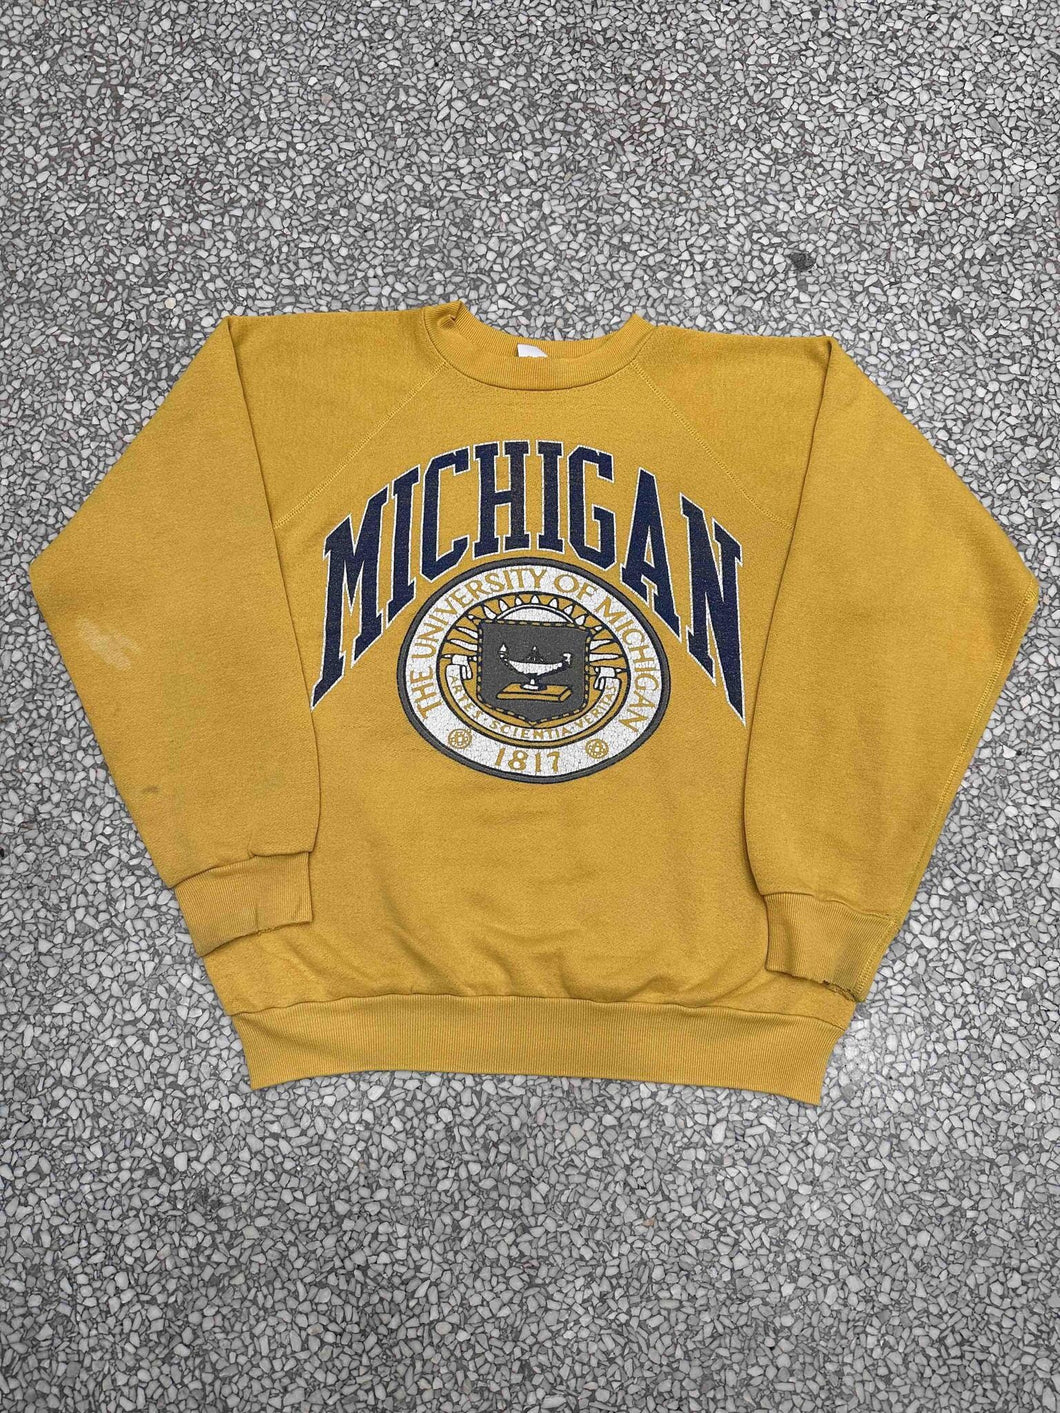 Michigan Wolverines Vintage 80s Crest Crewneck Faded Mustard ABC Vintage 